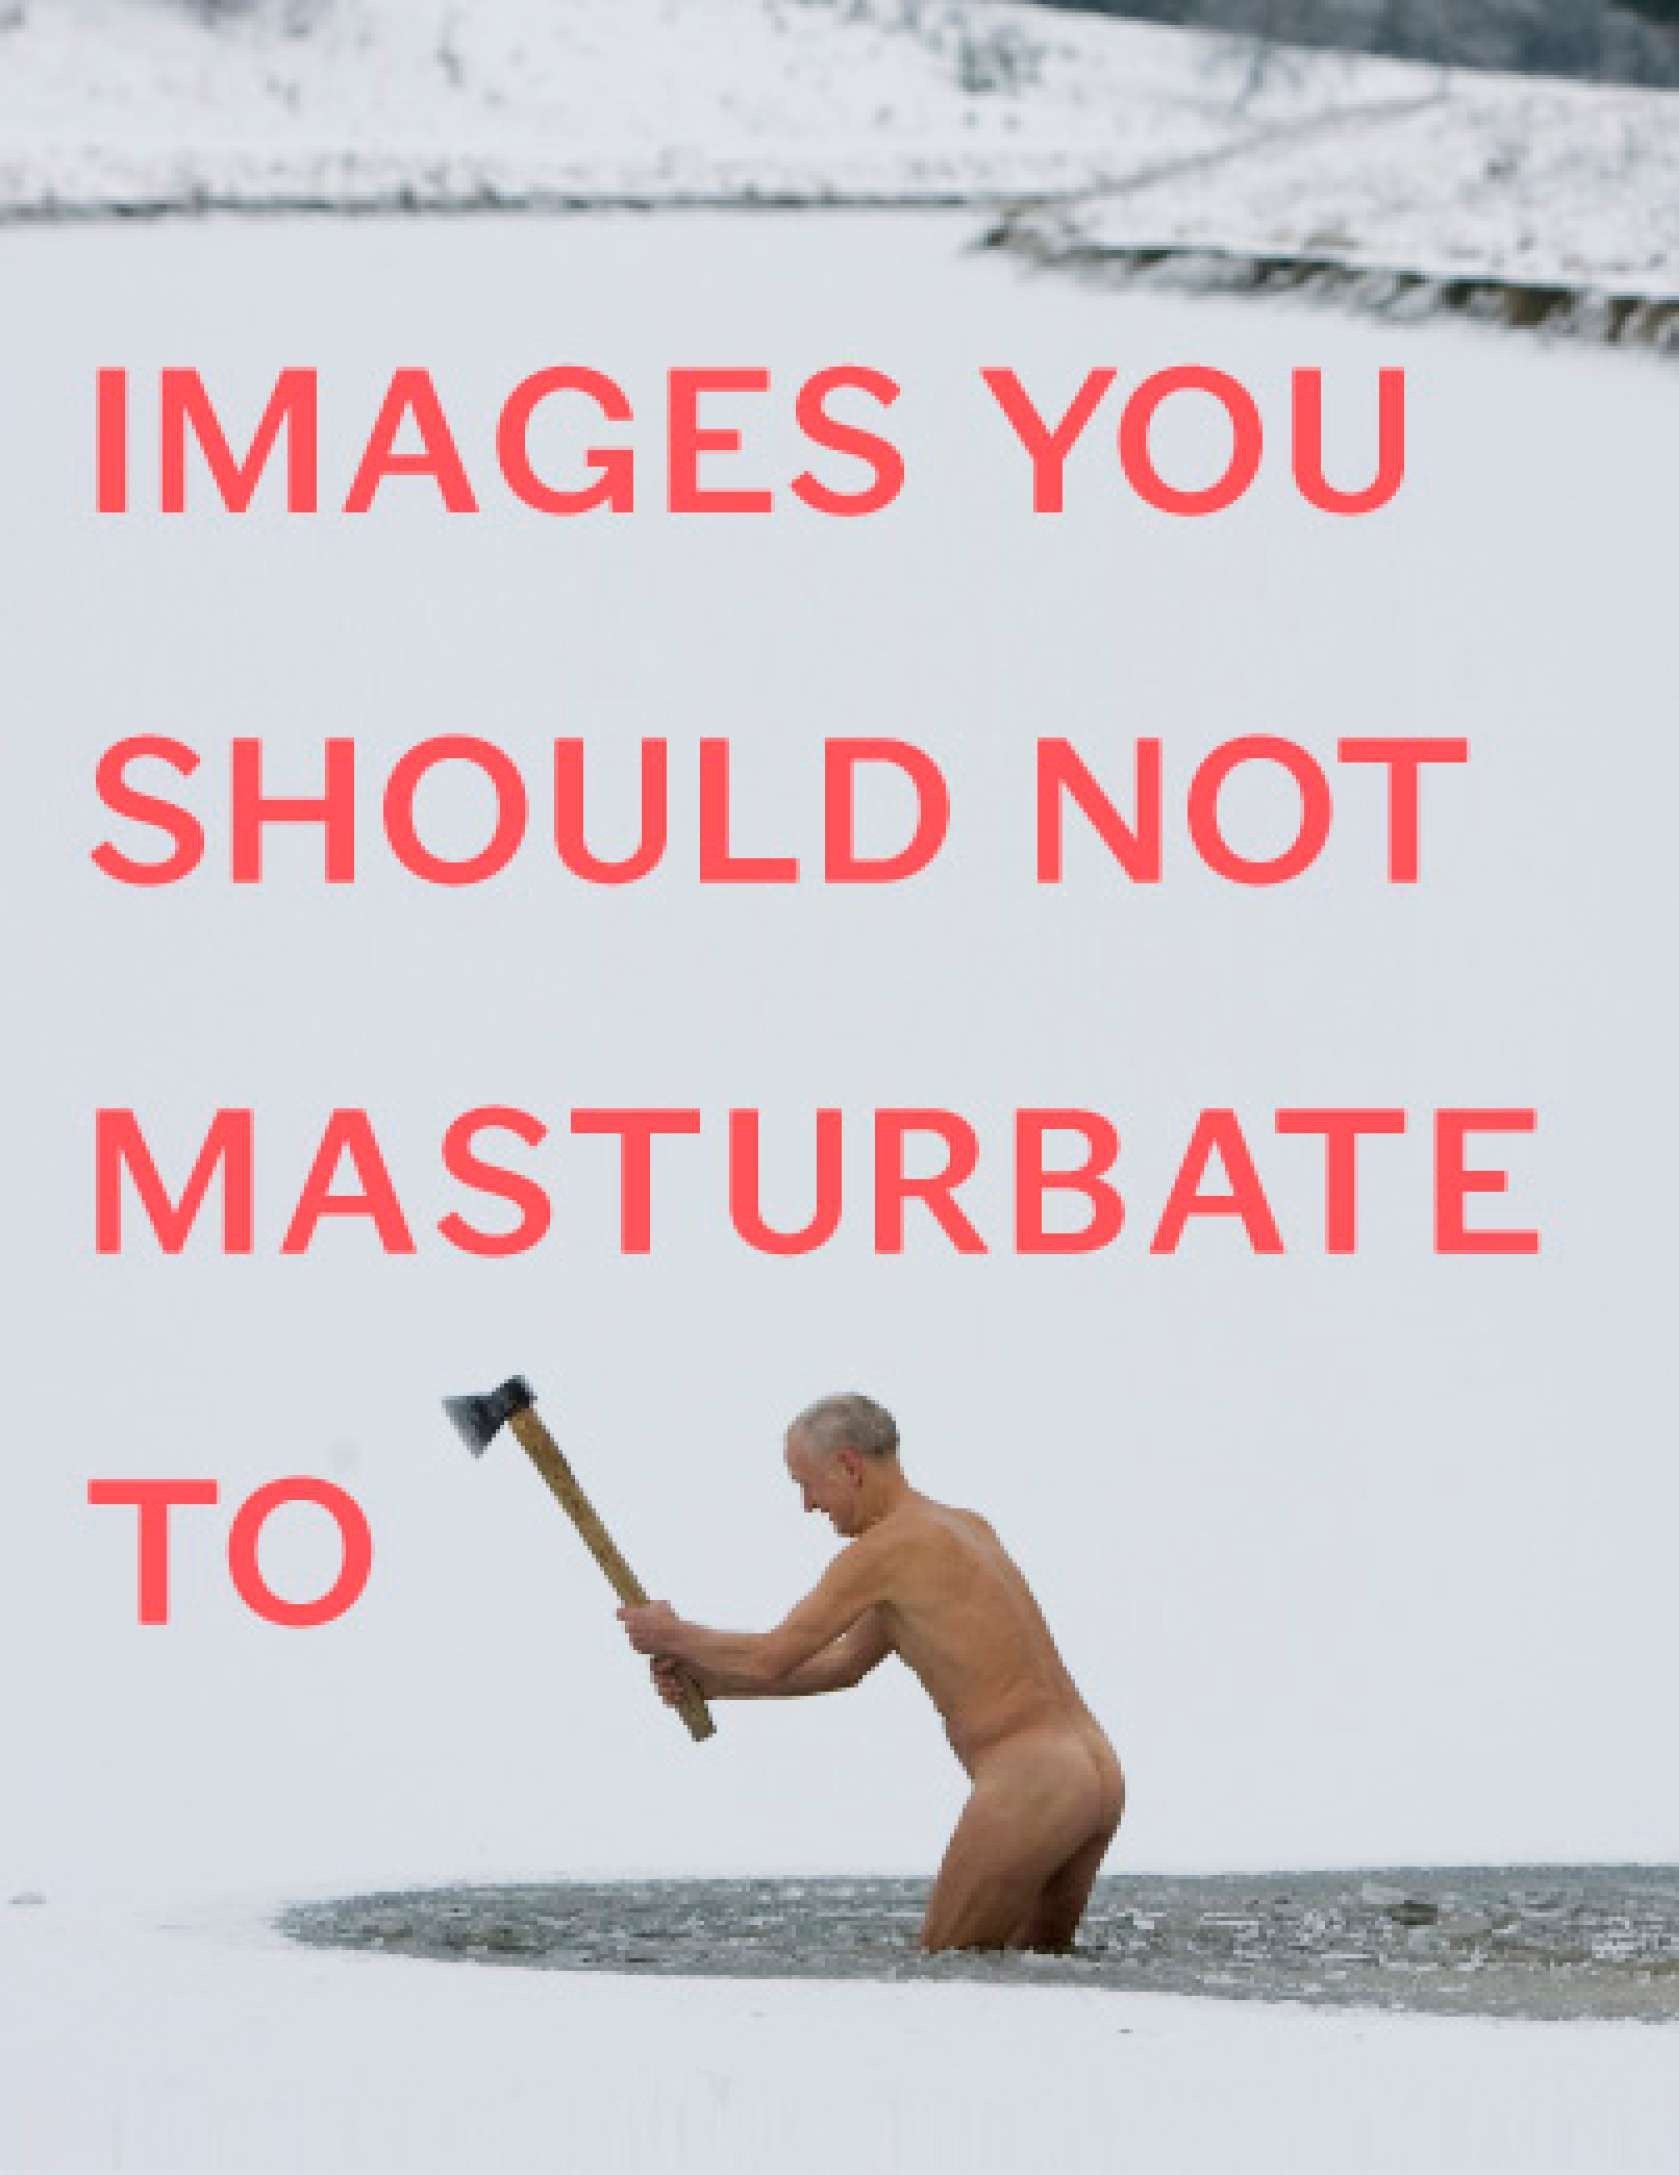 not to masturbate - Images You Should Not Masturbate